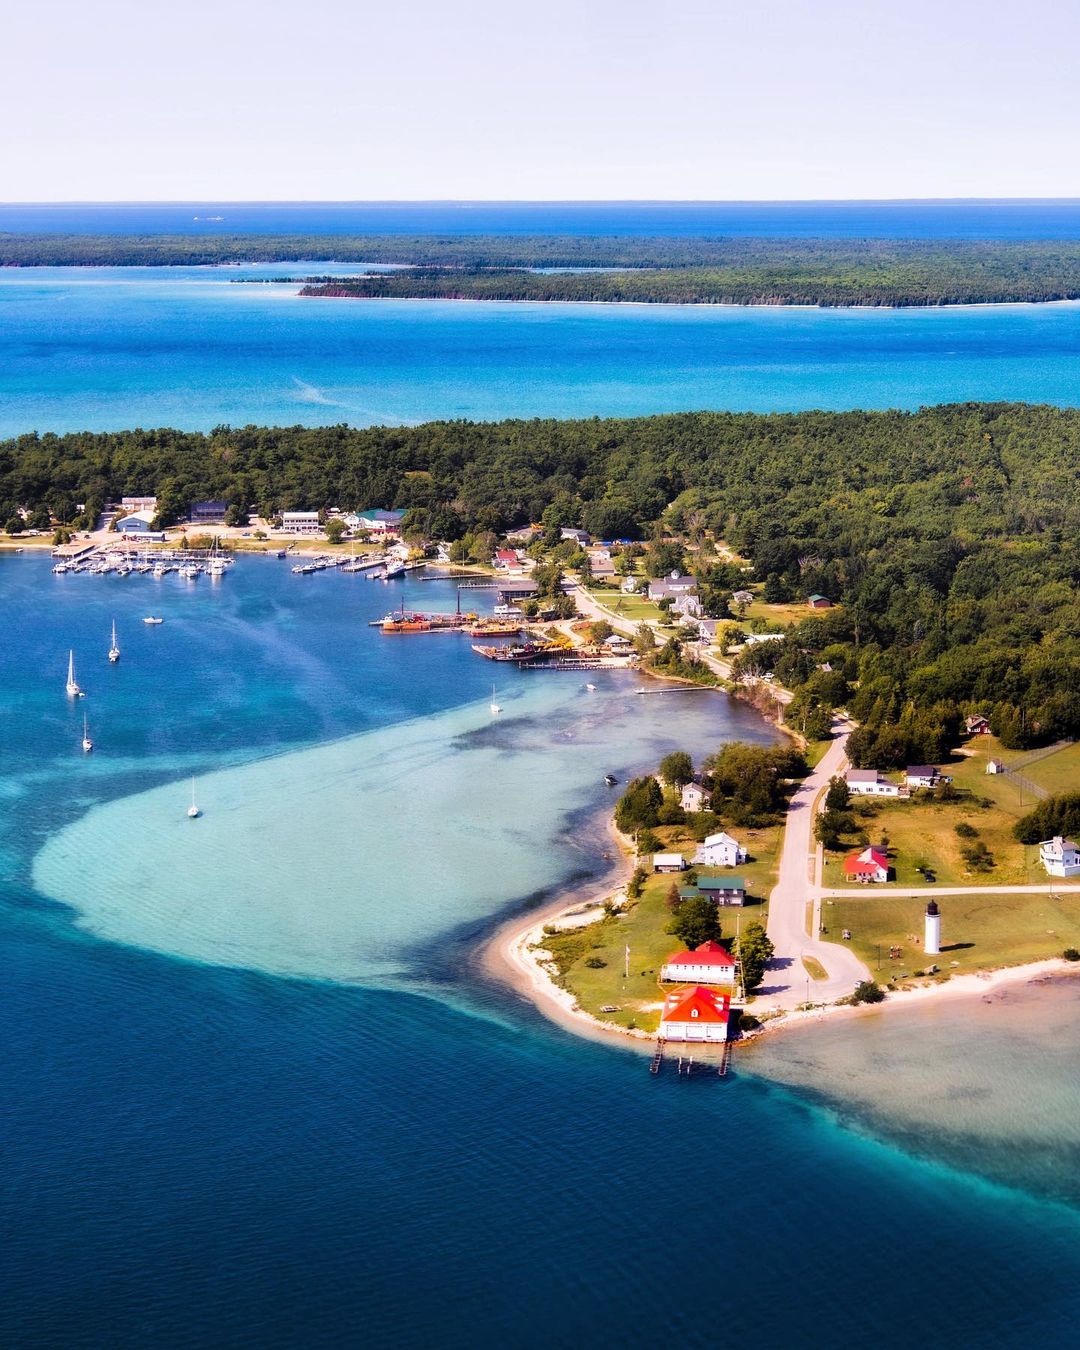 Aerial View of Lake Michigan at Beaver Island. Photo by Instagram user @shaleewanders